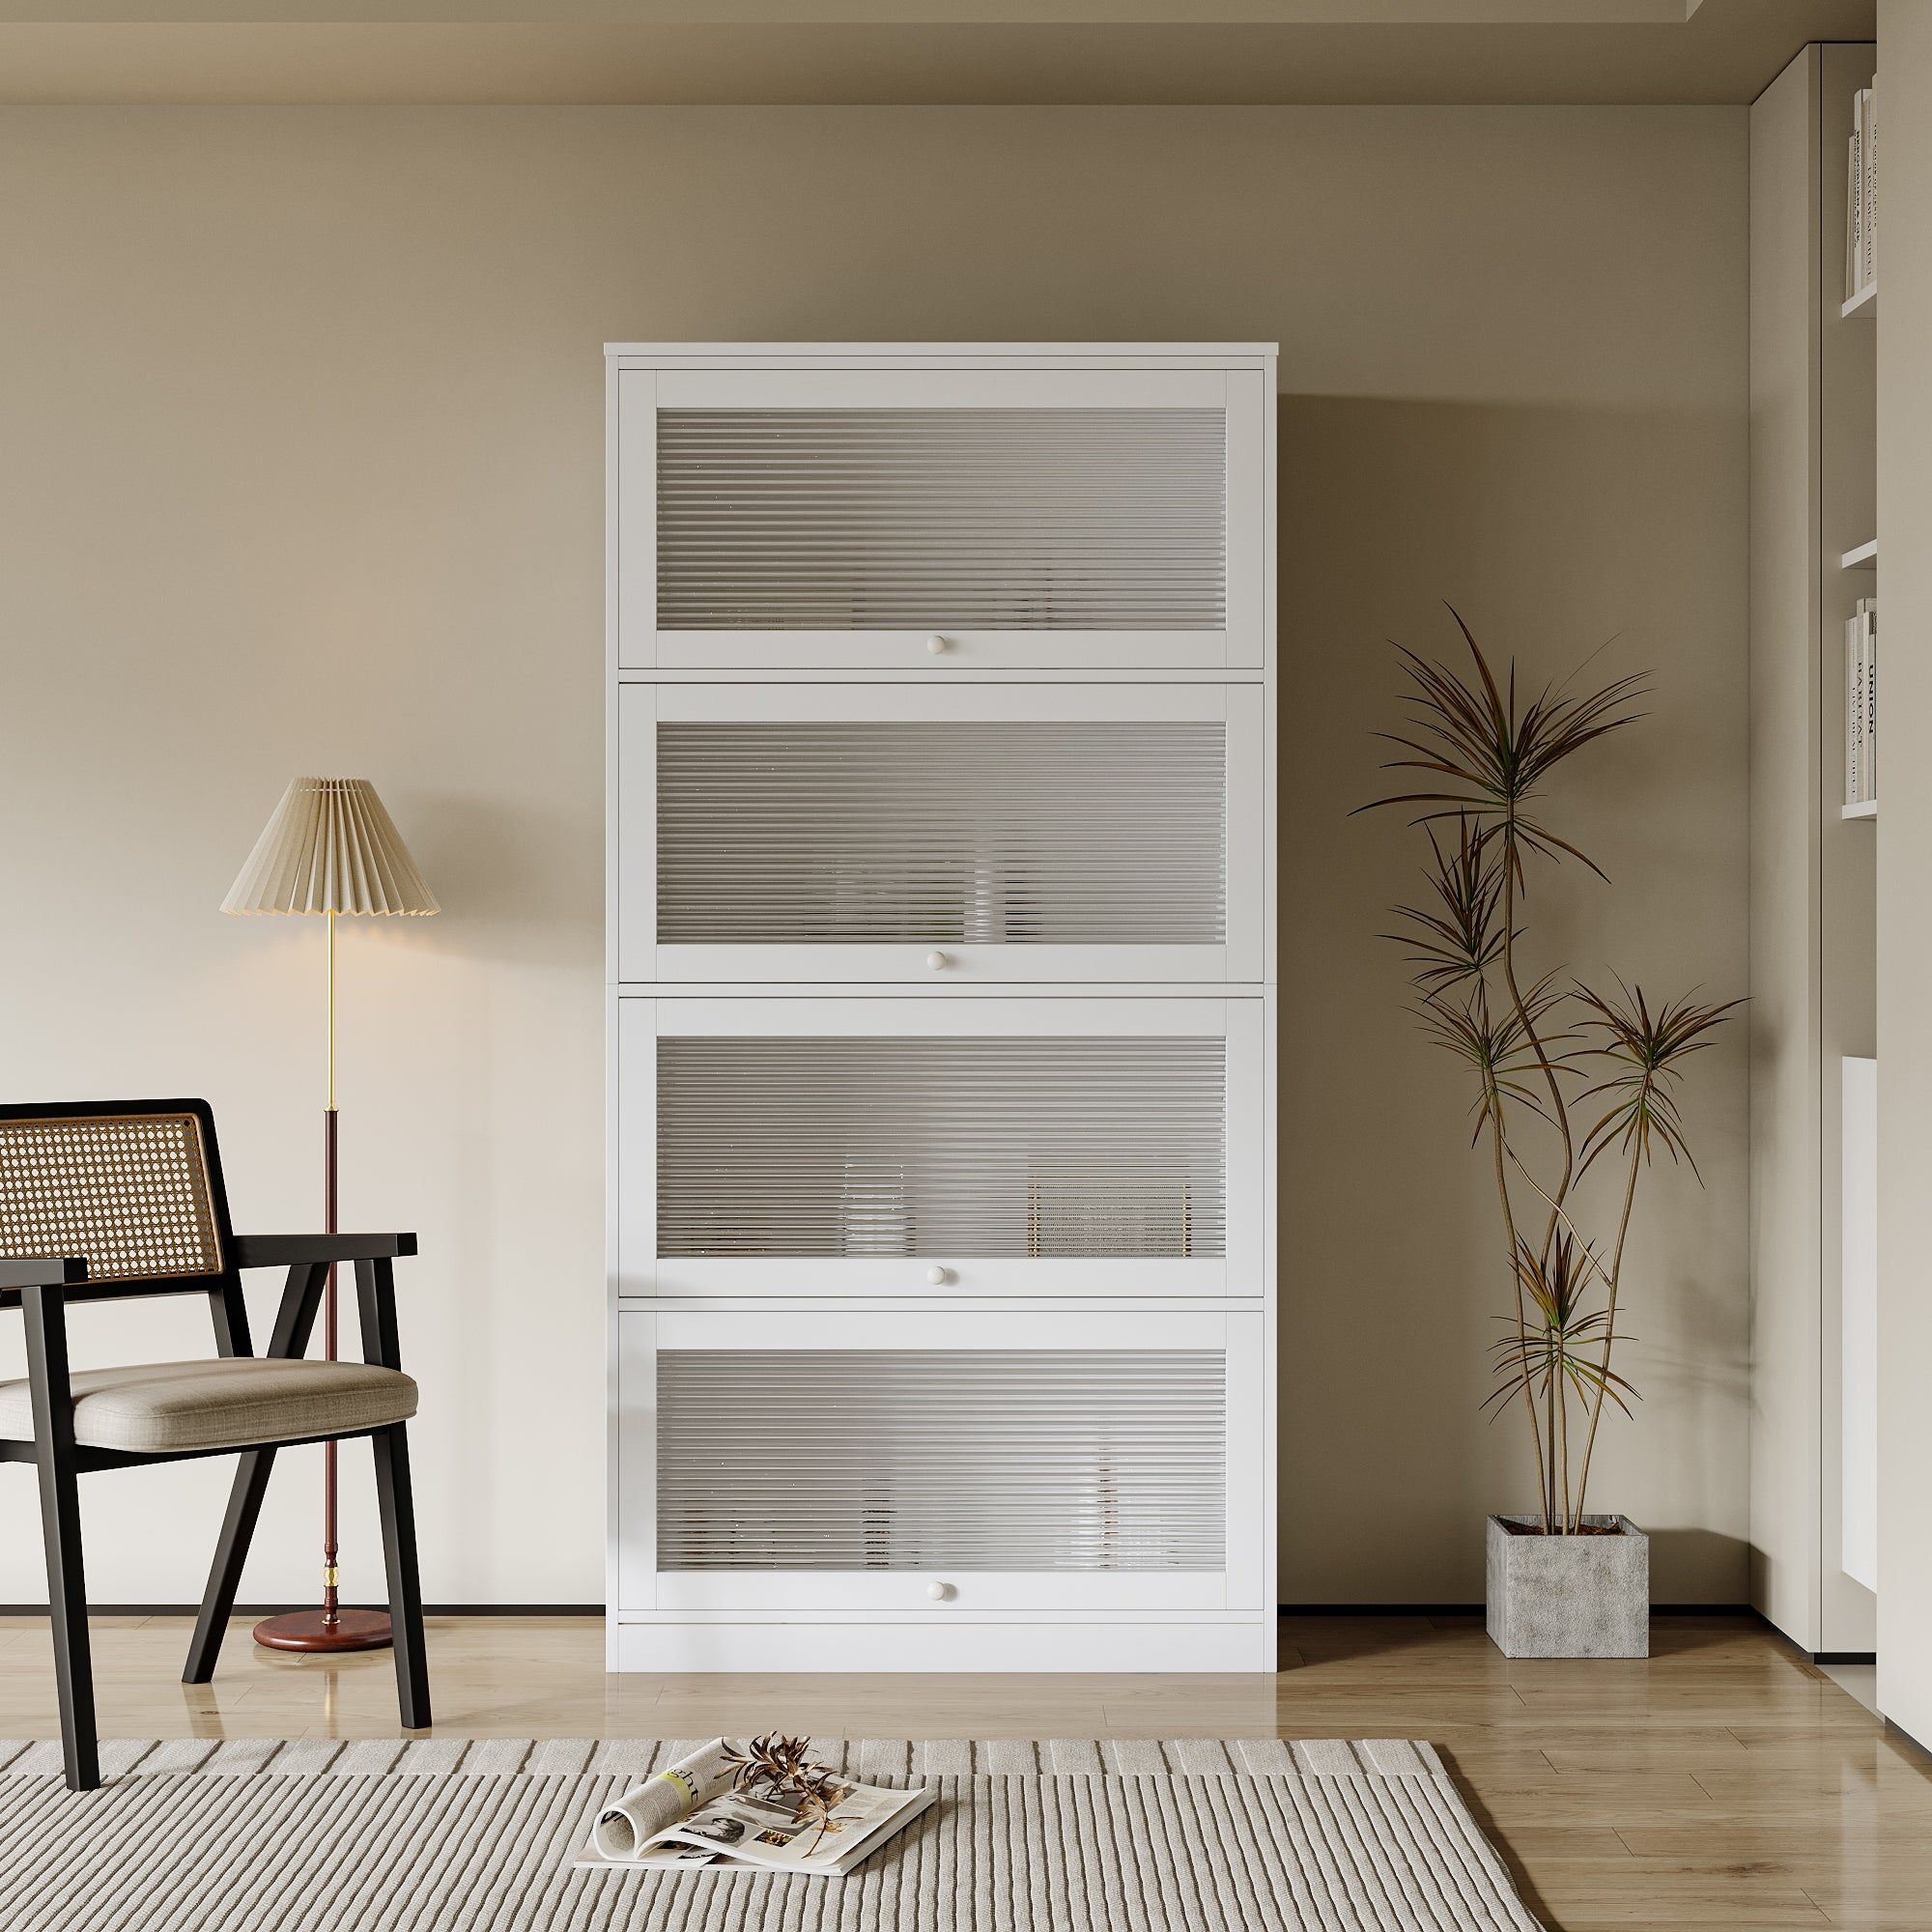 Stylish White Bookshelf with Glass Doors: A Chic Storage Solution